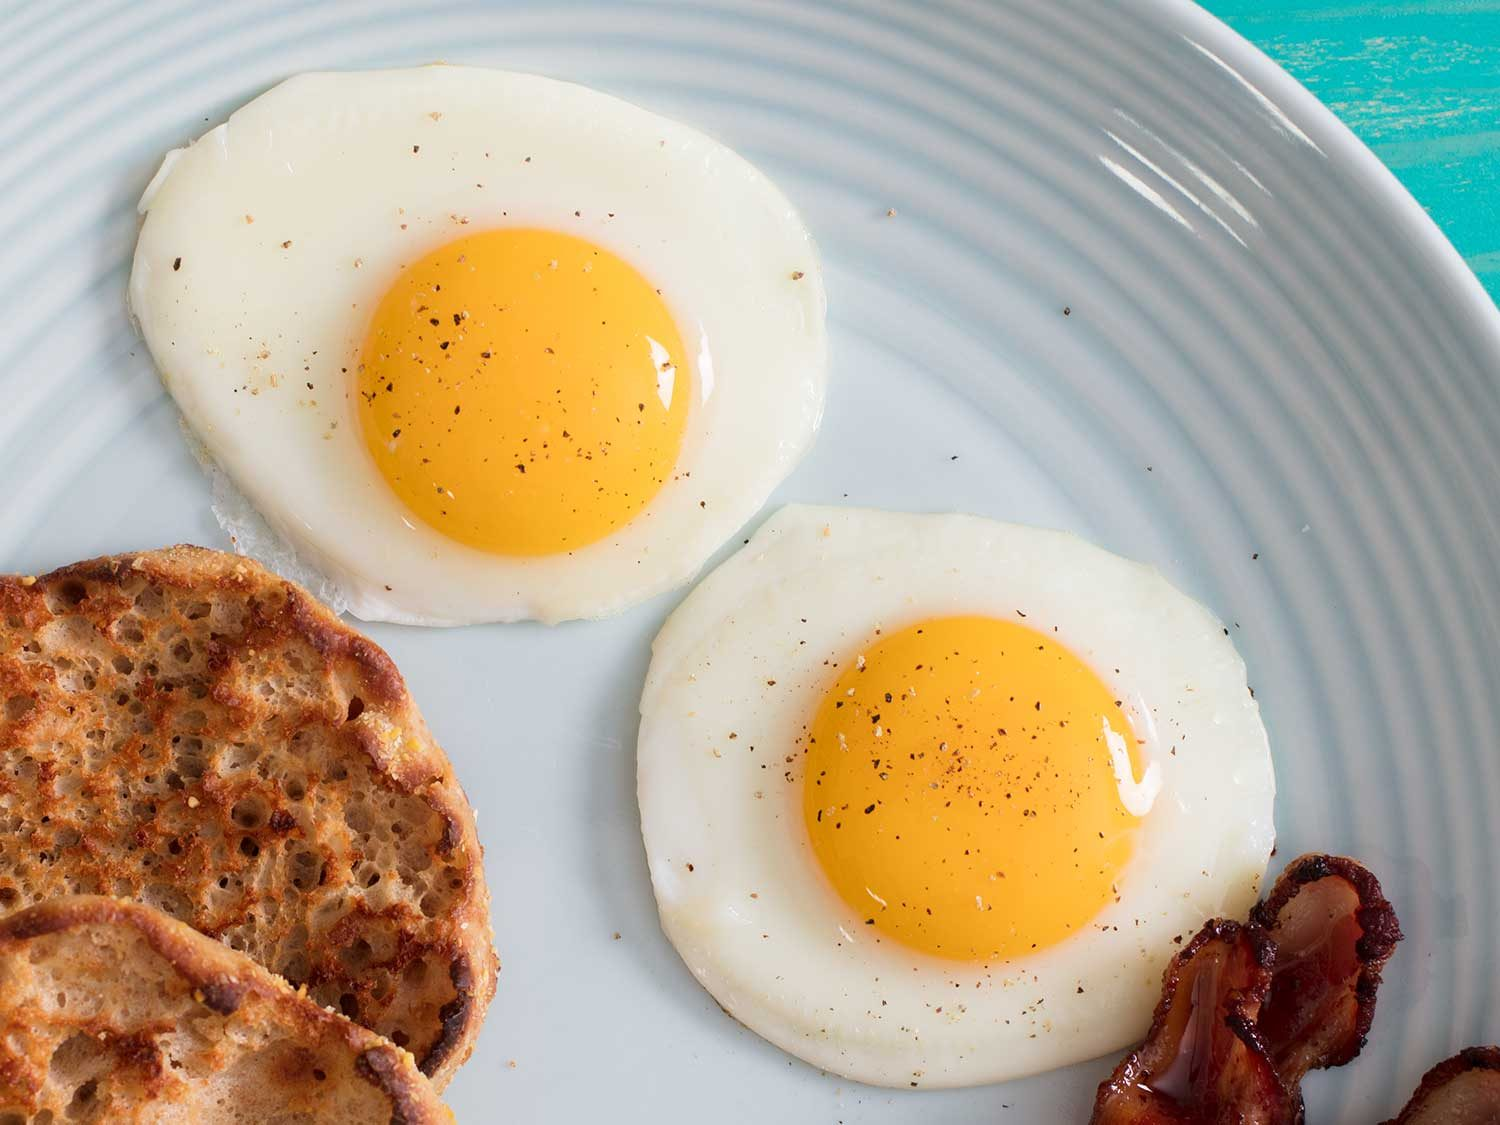 Eggs up. Санни Сайд ап яичница. Жареные яйца. Завтрак глазунья. Яичница для завтрака.